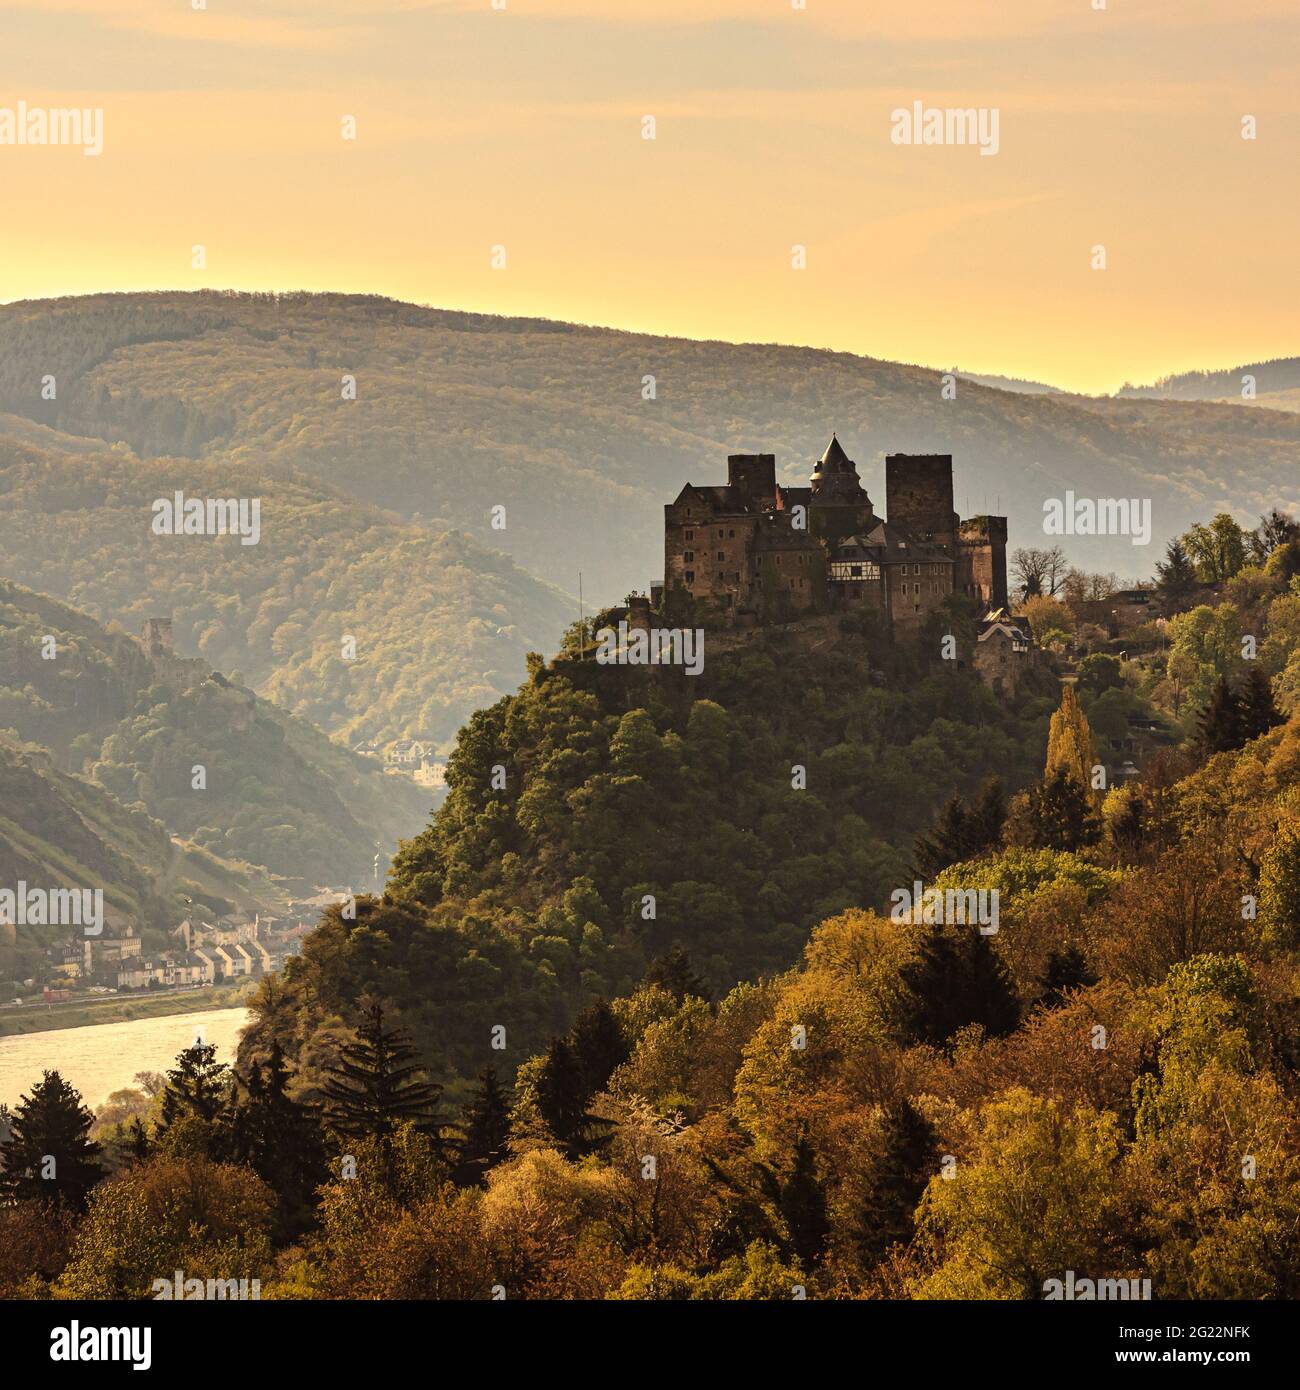 Schönburg castle at dawn, Oberwesel, rhine valley, Germany, Europe Stock Photo